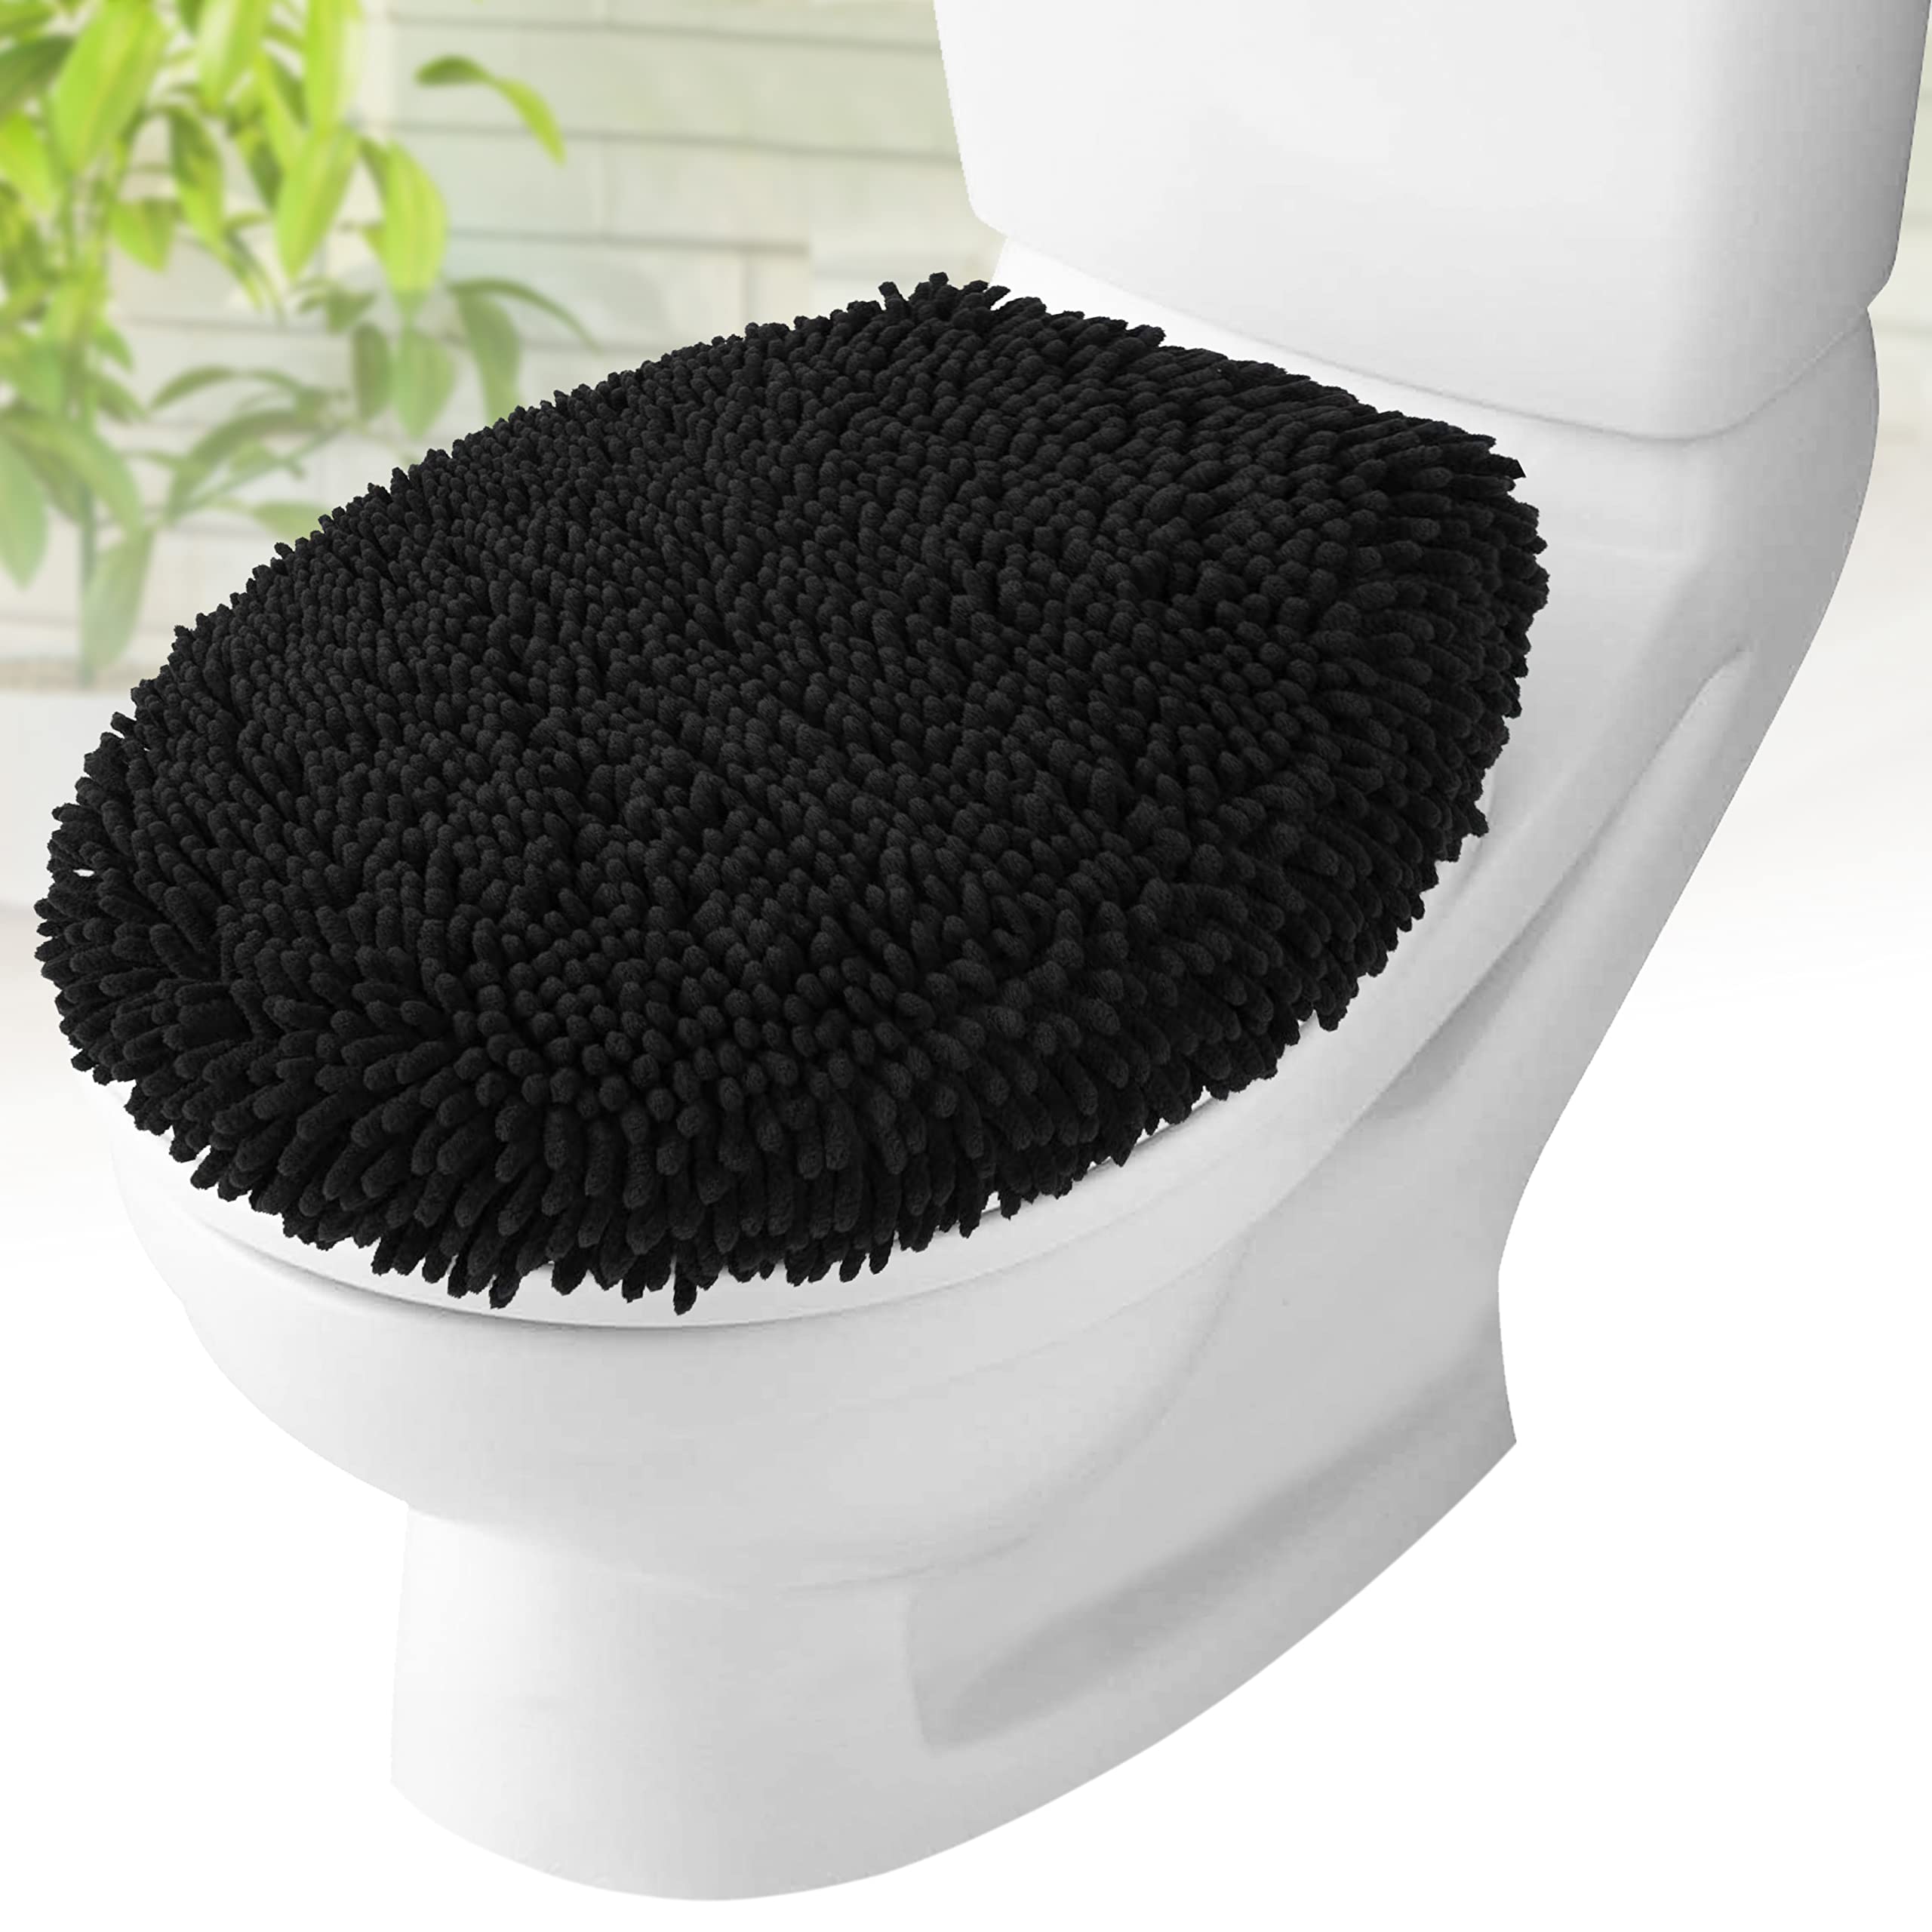 MAYSHINE Plush Shaggy Standard Toilet Seat Lid Cover (Black), Fuzzy  Chenille Microfiber, Fluffy Soft Absorbent - Machine Washable Cushion